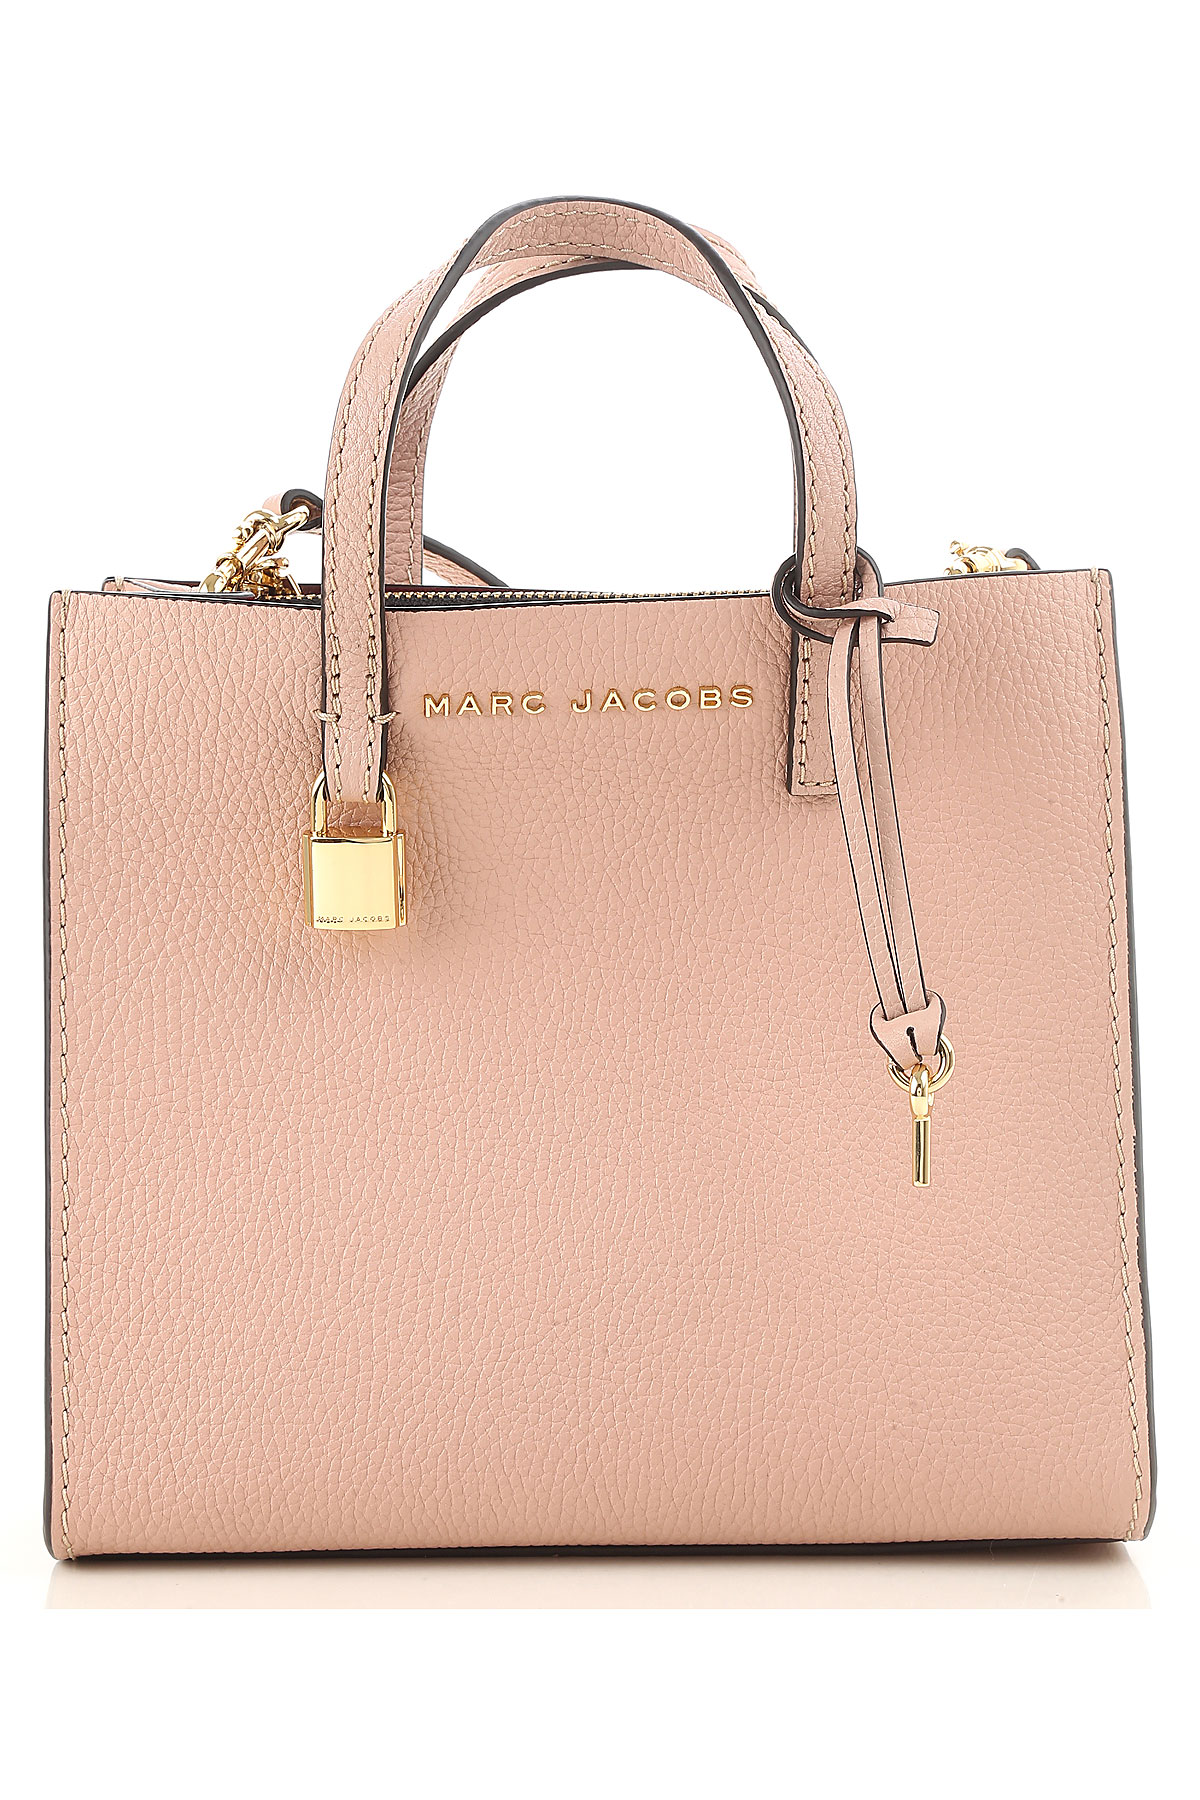 Handbags Marc Jacobs, Style code: m0013268-693-